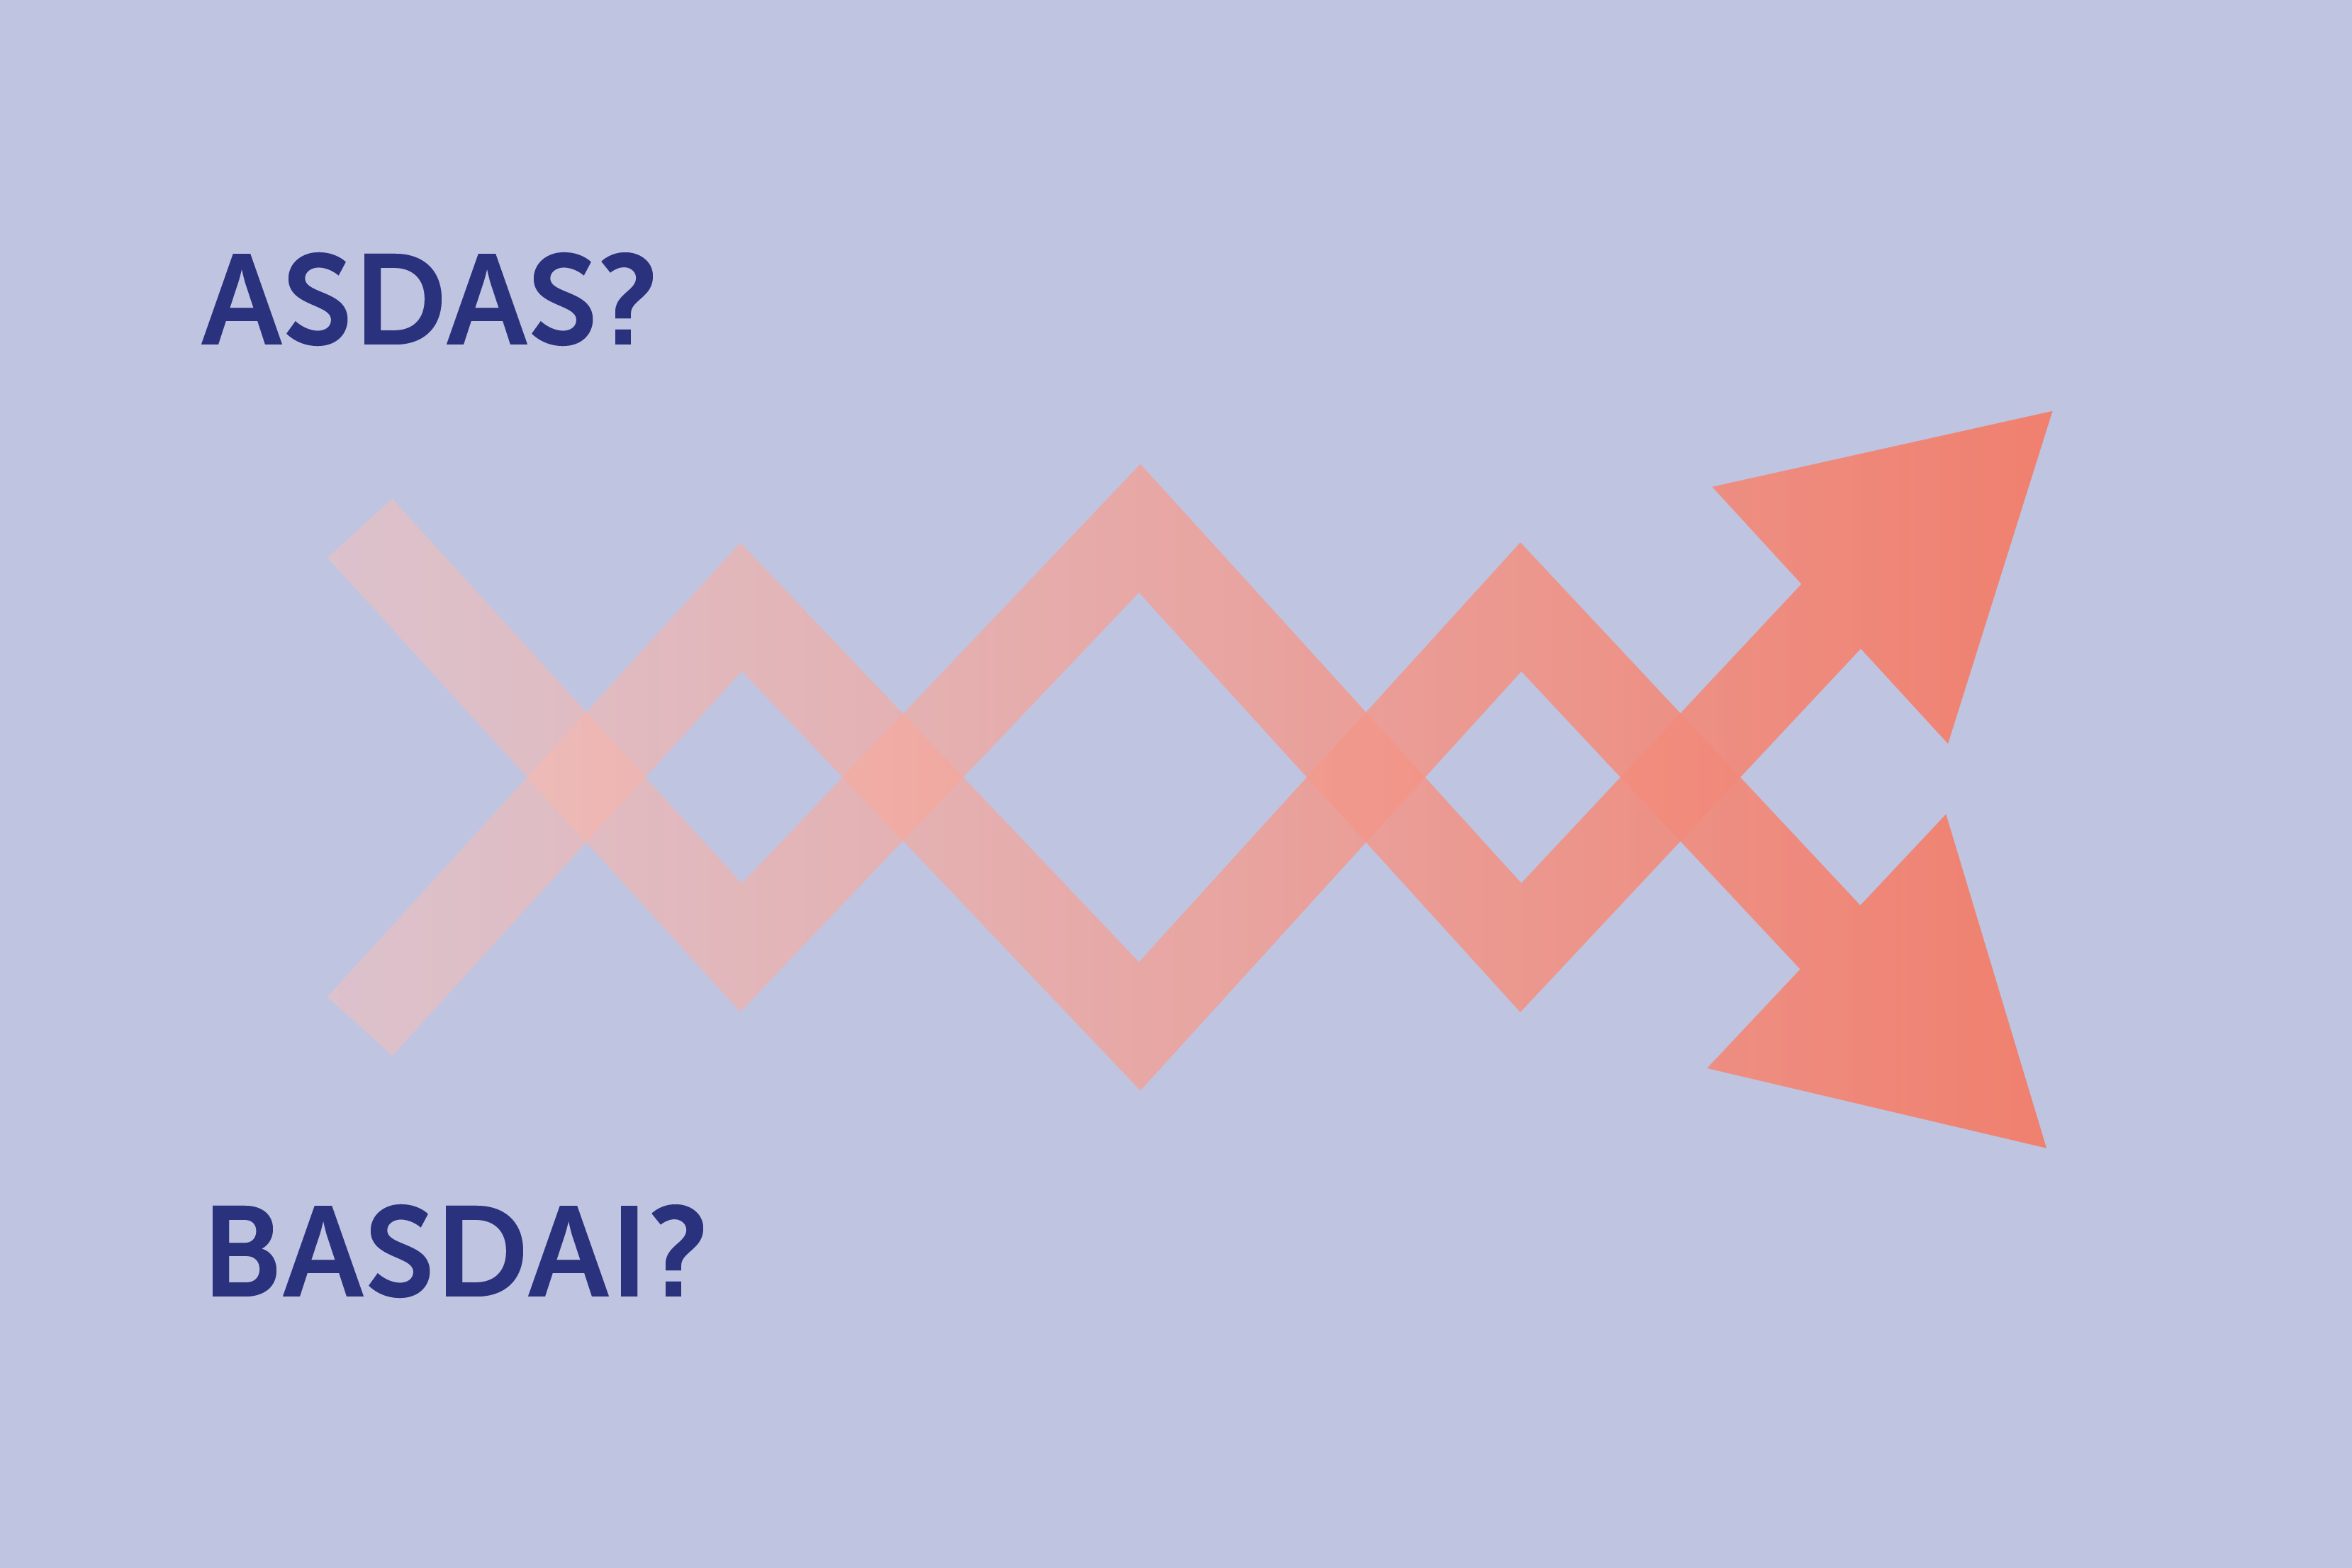 BASDAI or ASDAS: Which should we use?